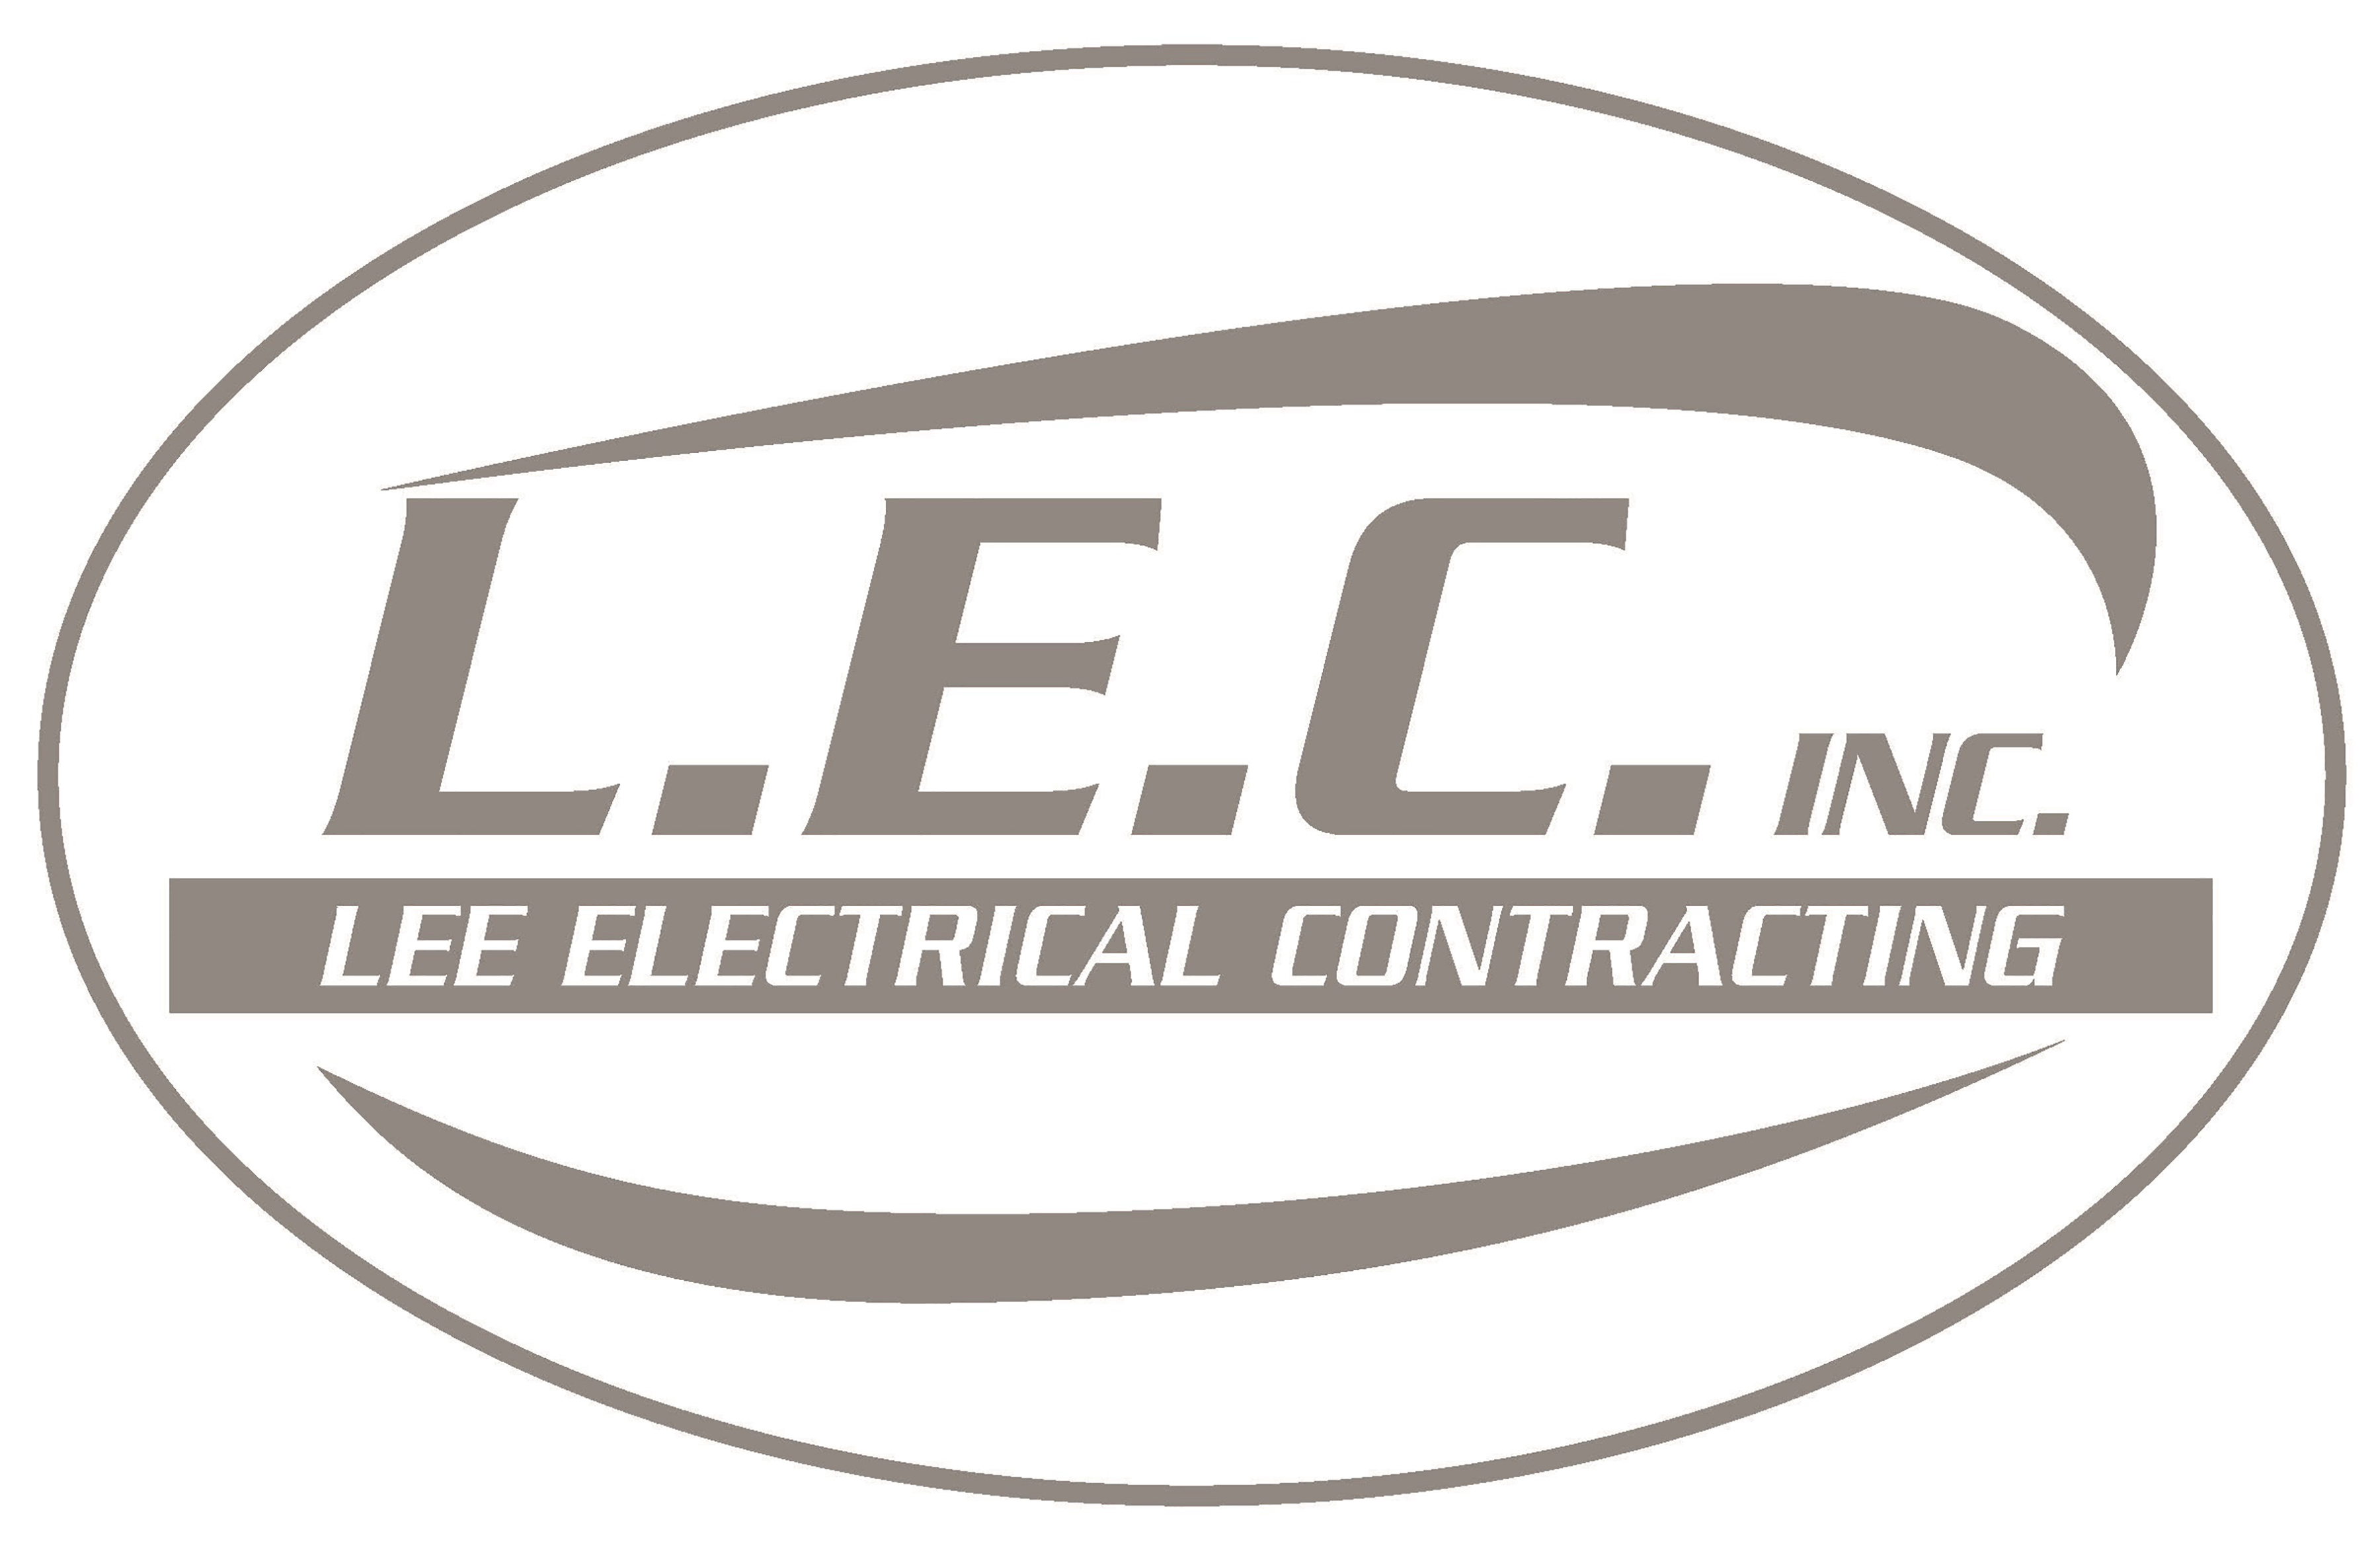 LEC Electrical